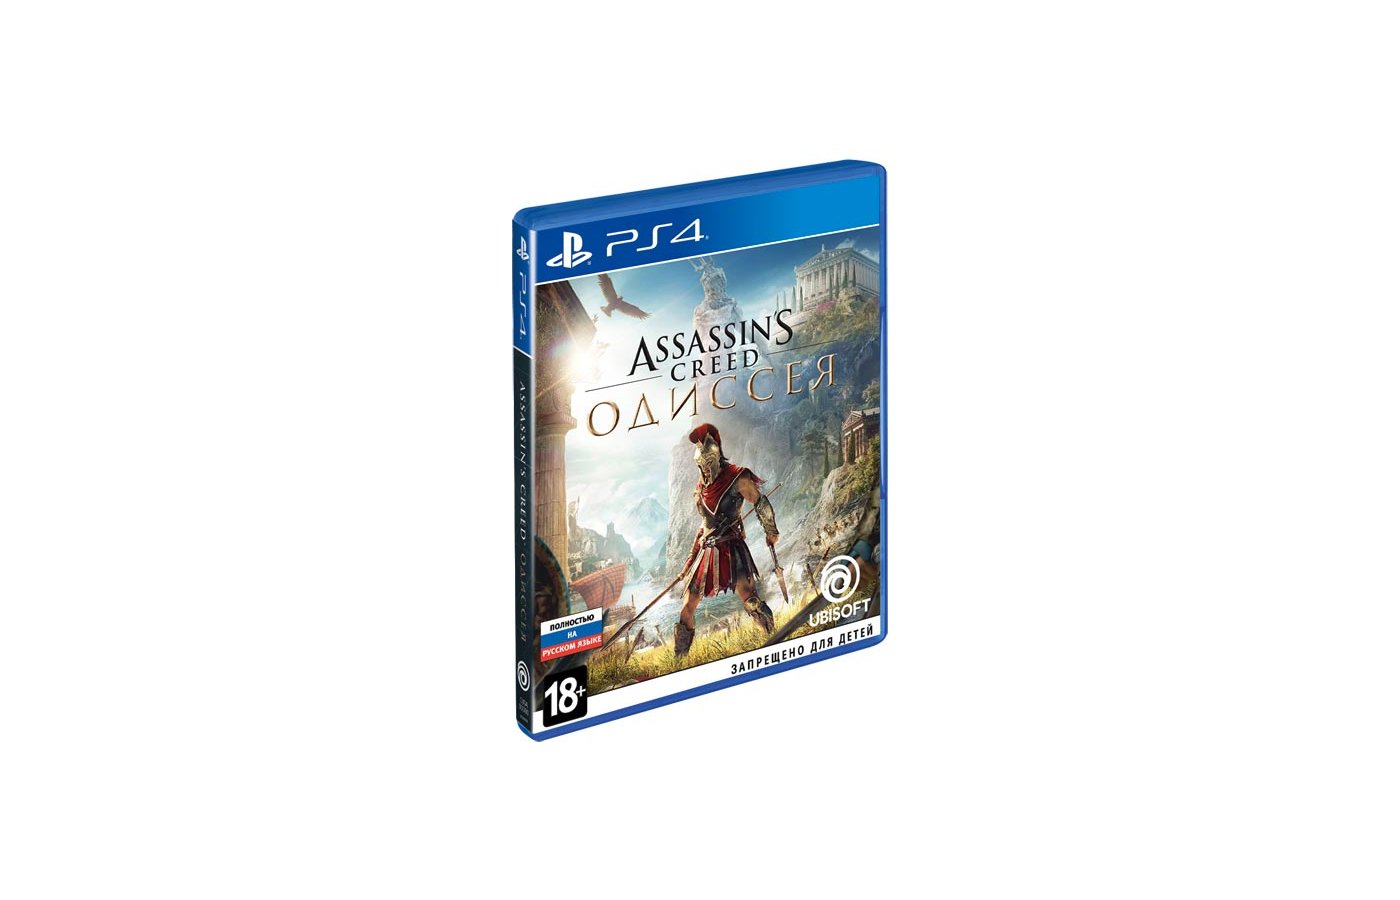 Игра assassins creed ps4. Ассасин Крид Одиссея диск ПС 4. Диск на ПС 4 ассасин Крид Odyssey. Assassin's Creed Одиссея ps4. Ps4 диск Assassins Creed.